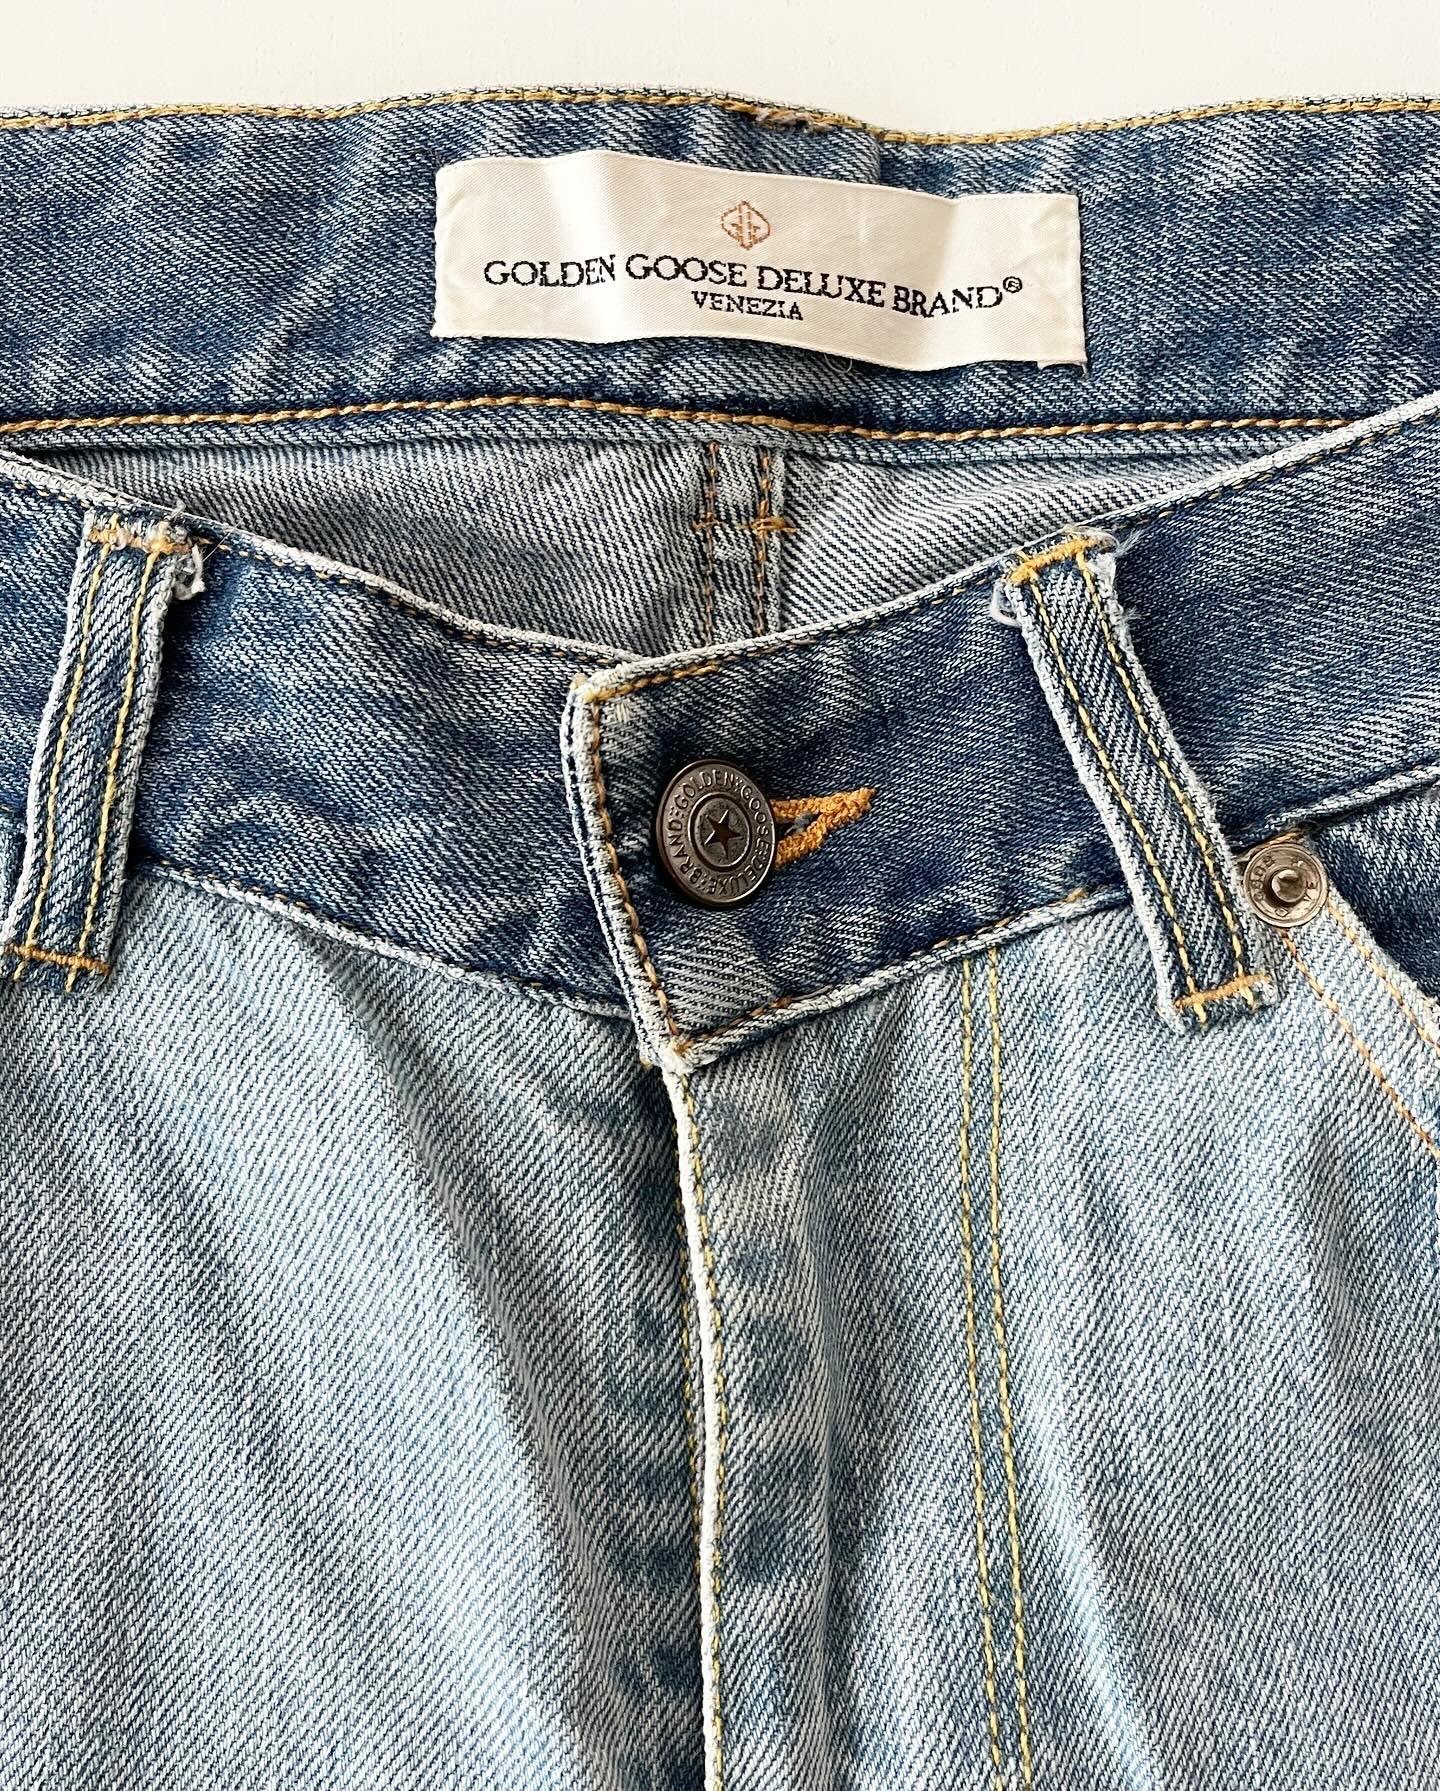 GOLDEN GOOSE - GOLDEN GOOSE Jeans - AVVIIVVA.COM